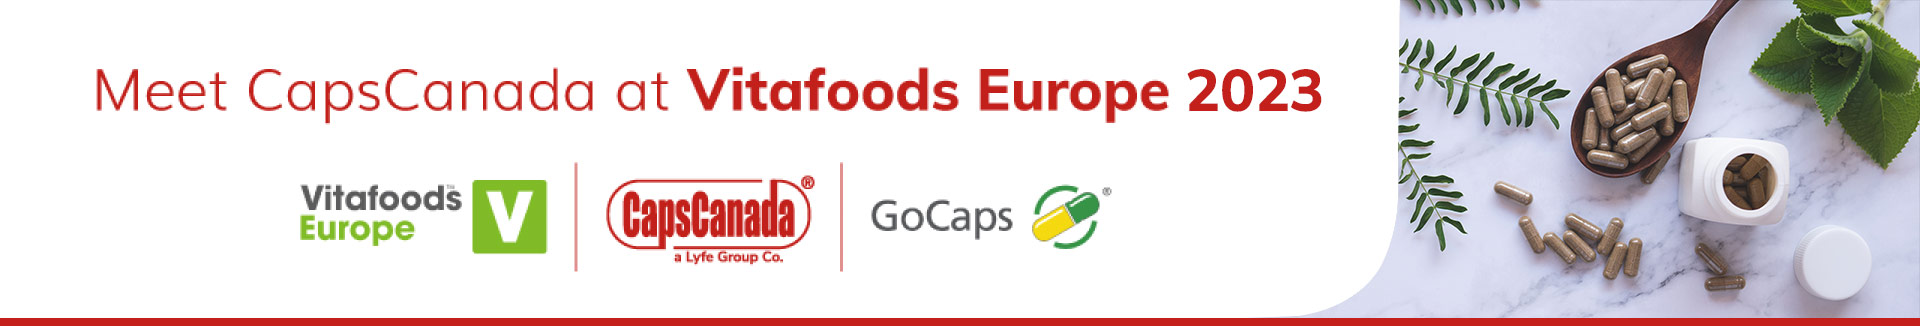 Banner-Vitafoods-Europe-CapsCanada